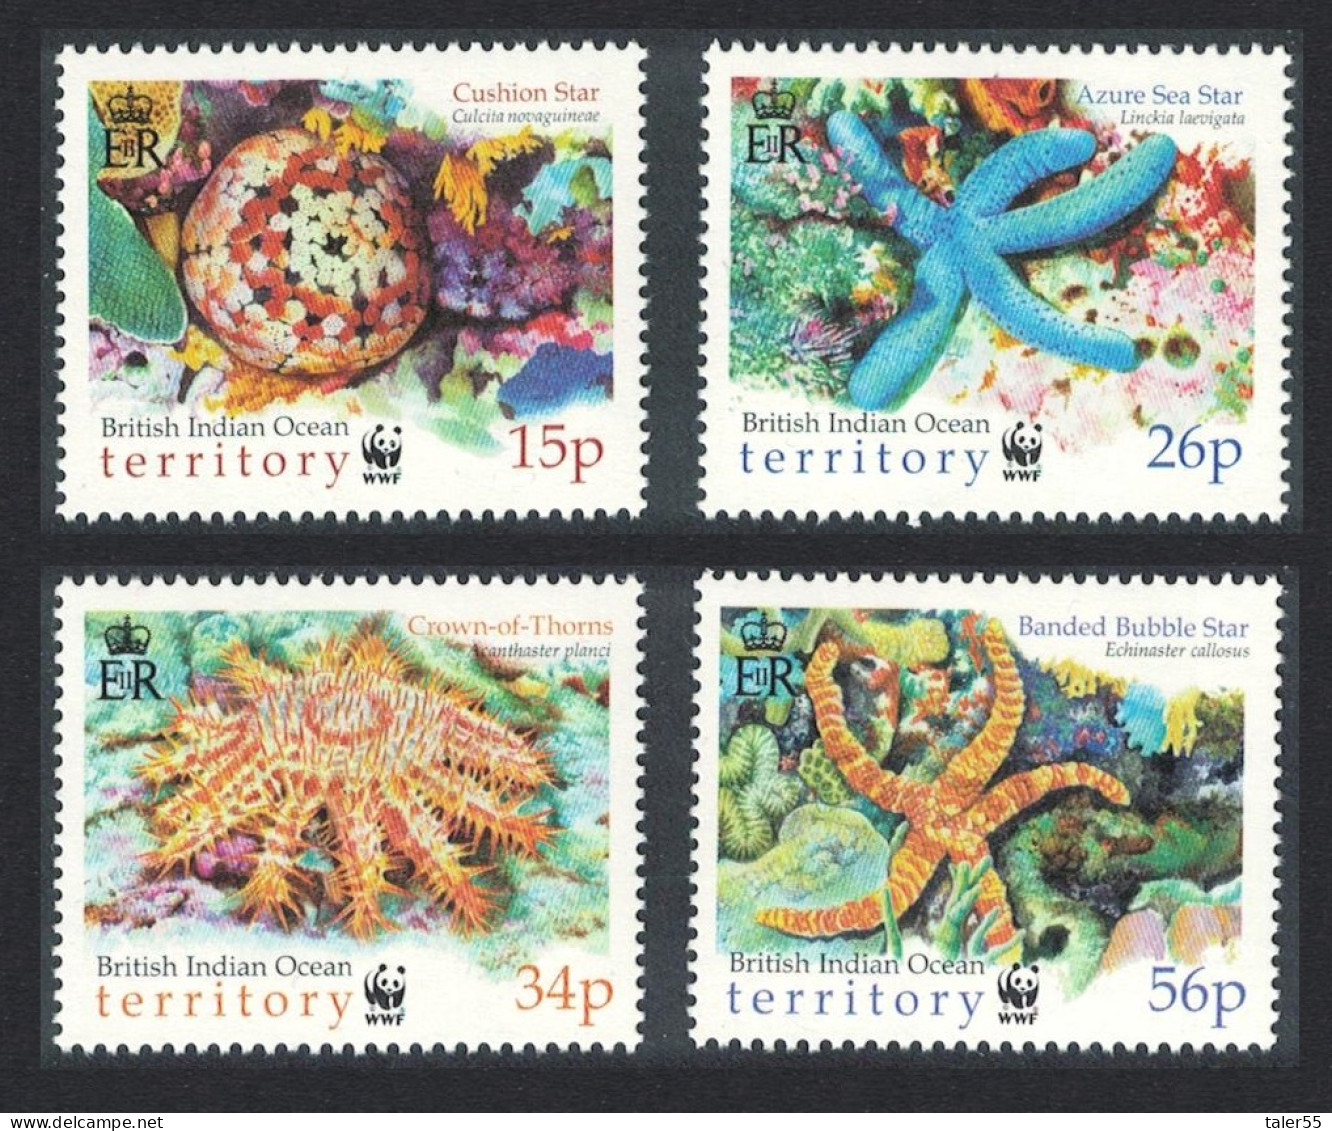 BIOT WWF Sea Stars 4v 2001 MNH SG#253-256 MI#266-269 Sc#231-234 - British Indian Ocean Territory (BIOT)